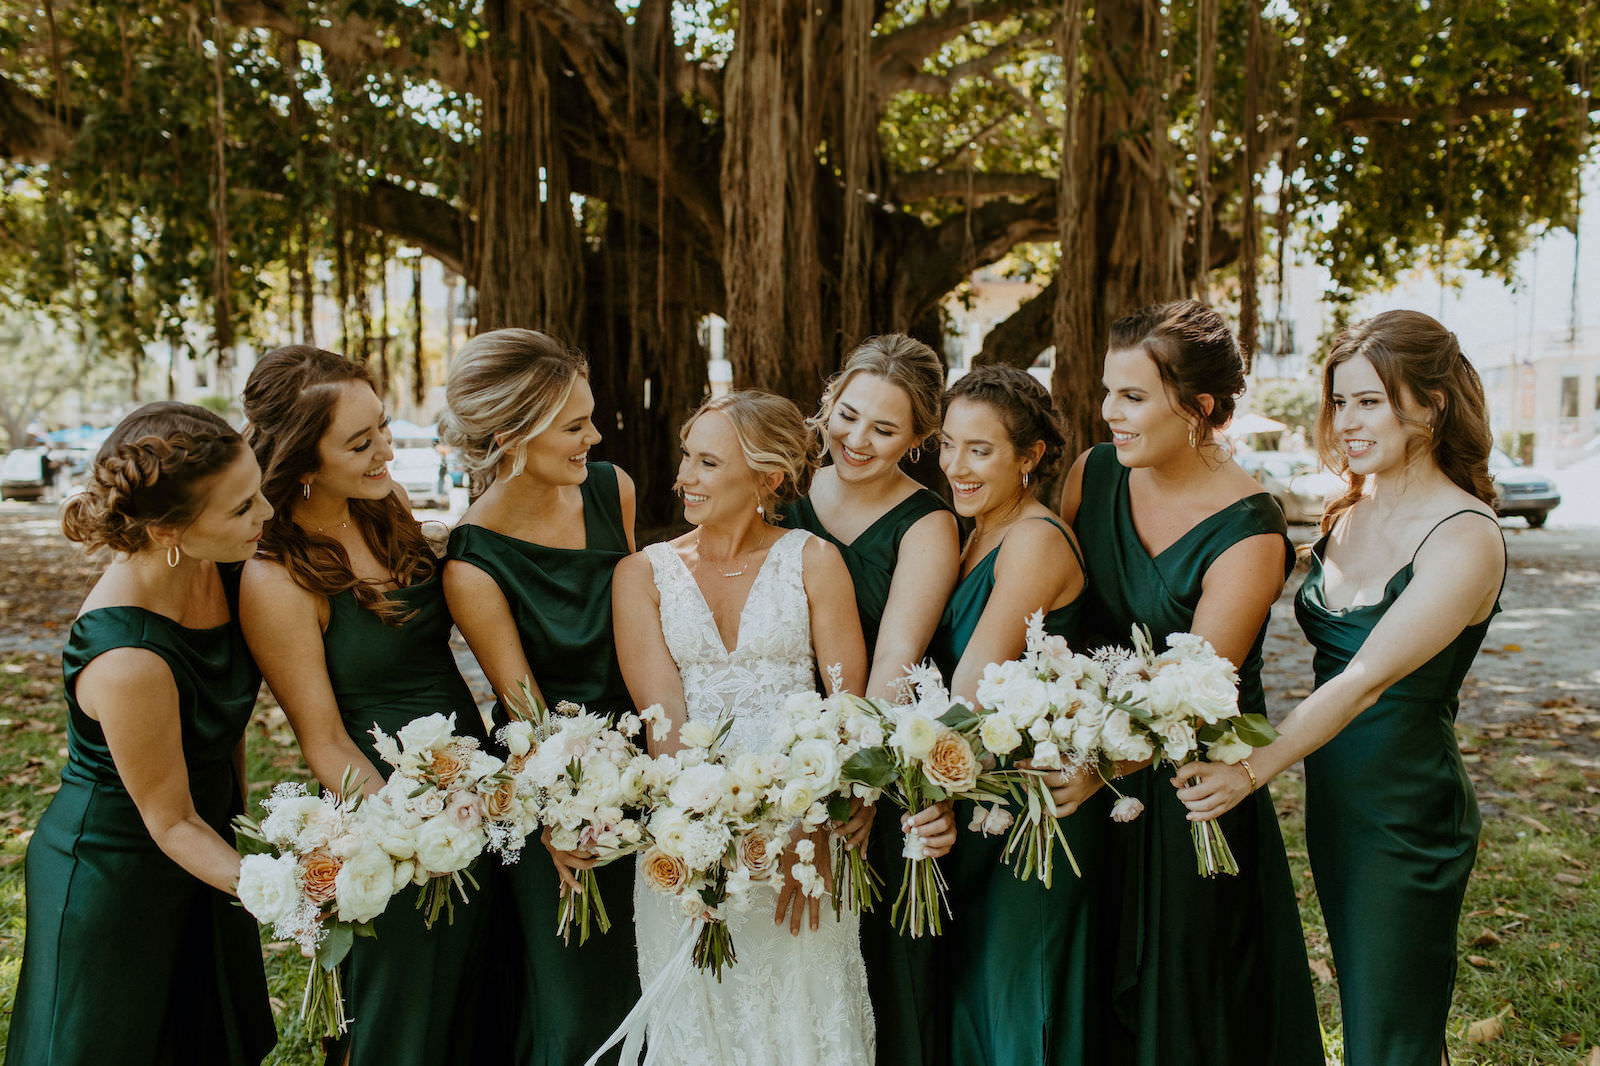 Bride with Bridesmaids in Emerald Green Bridesmaids Dresses Wedding Portrait